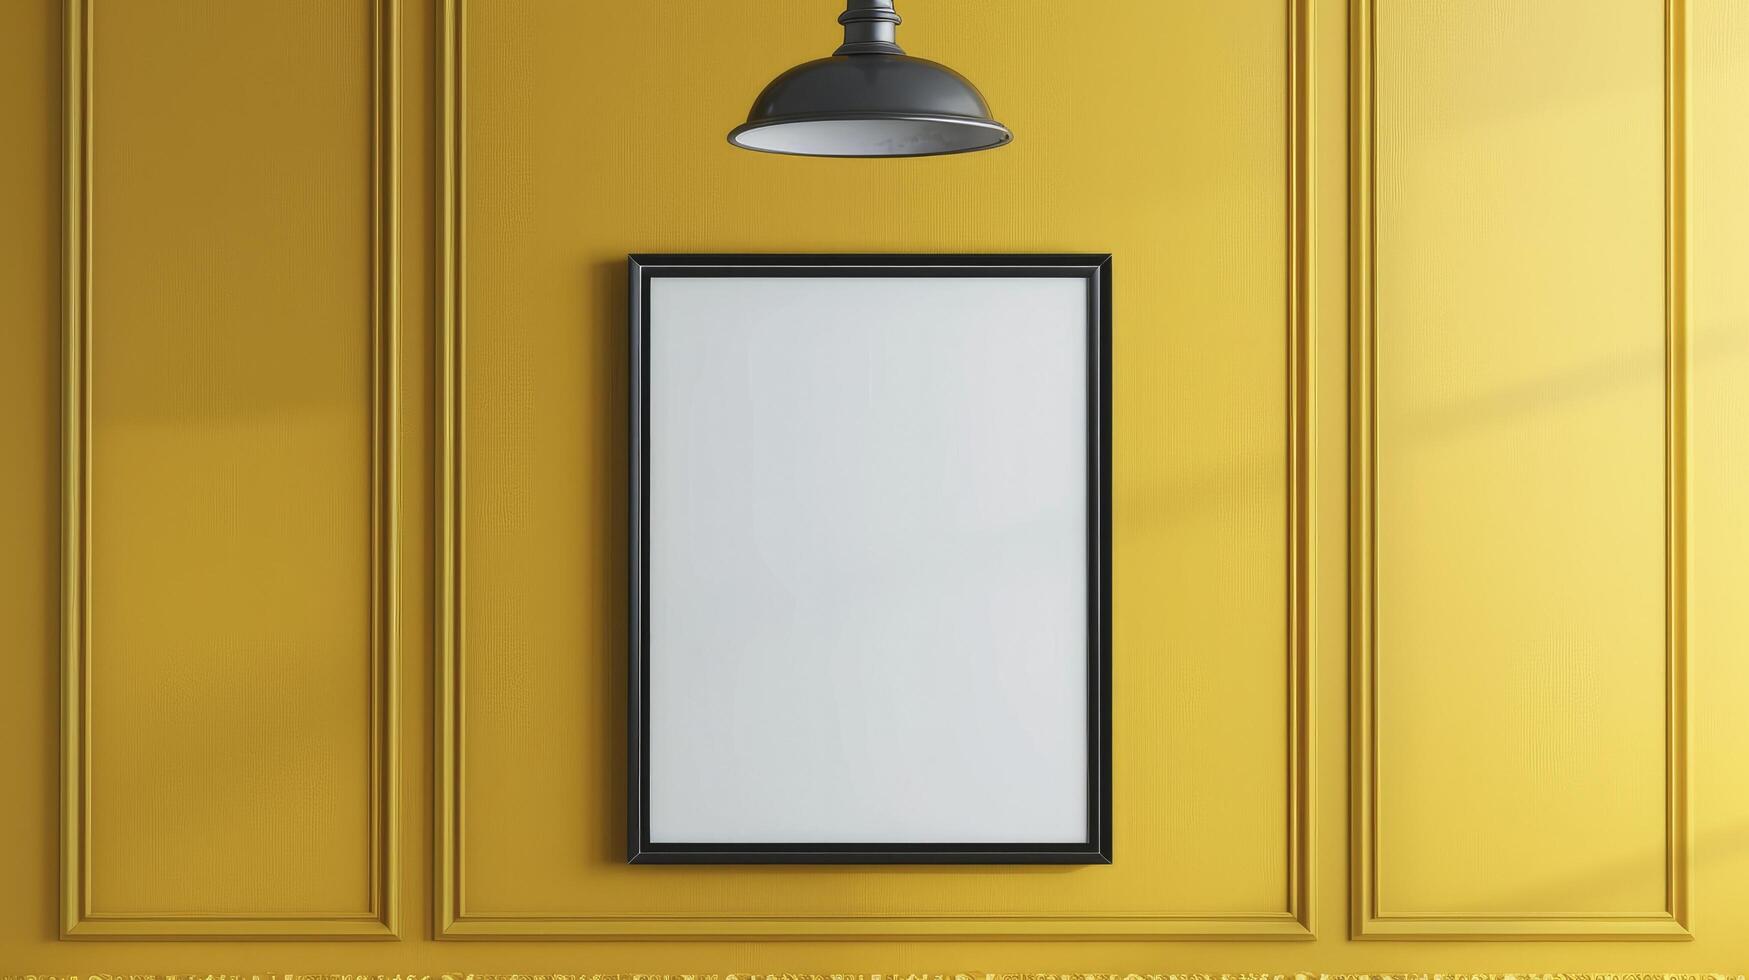 ai generado galería inspiración, blanco imagen marco en vibrante amarillo pared con colgando lámpara. Perfecto foto marco o póster modelo Bosquejo